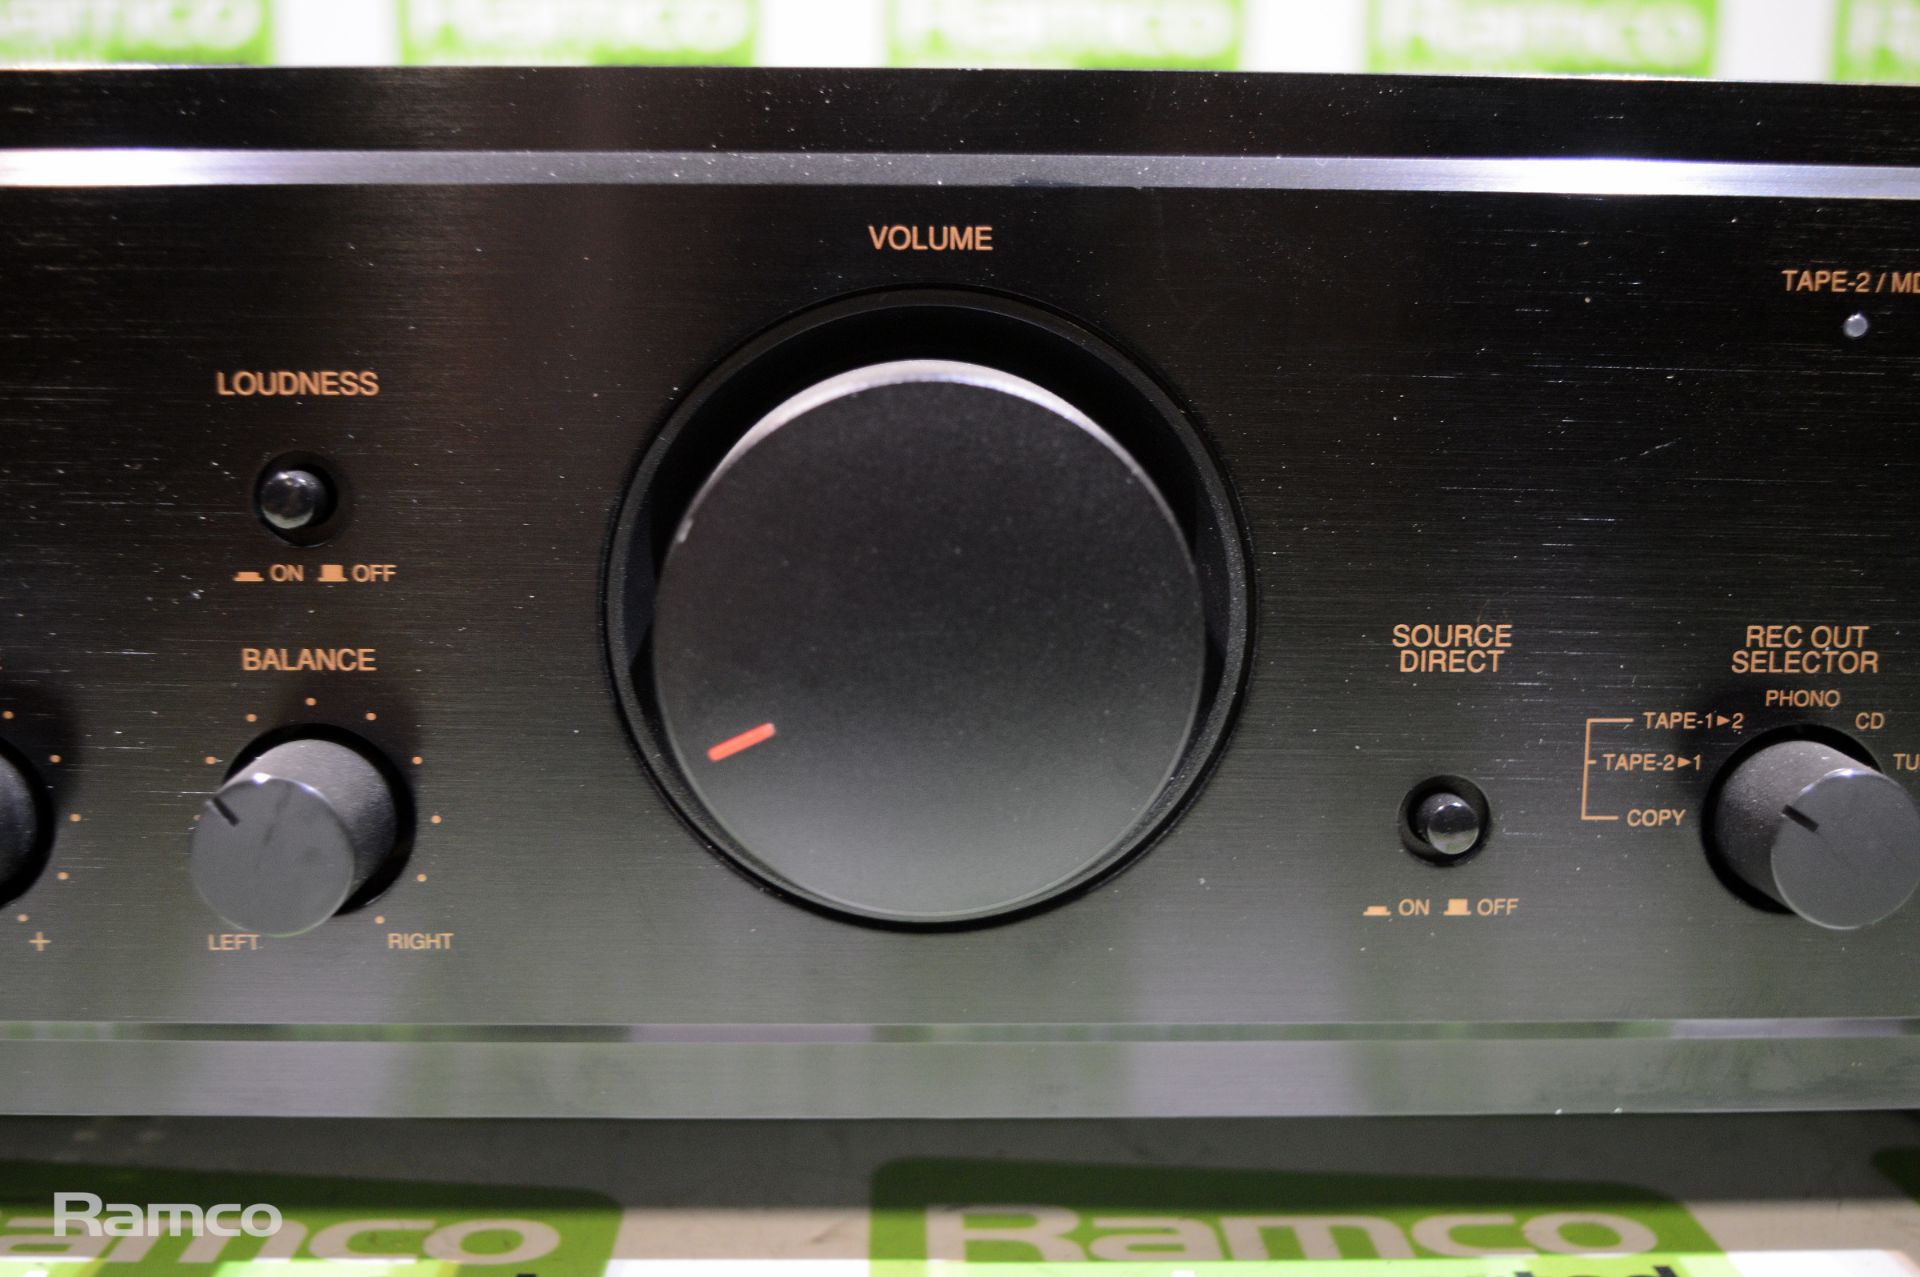 Denon PMA-355UK amplifier audio - Image 2 of 4